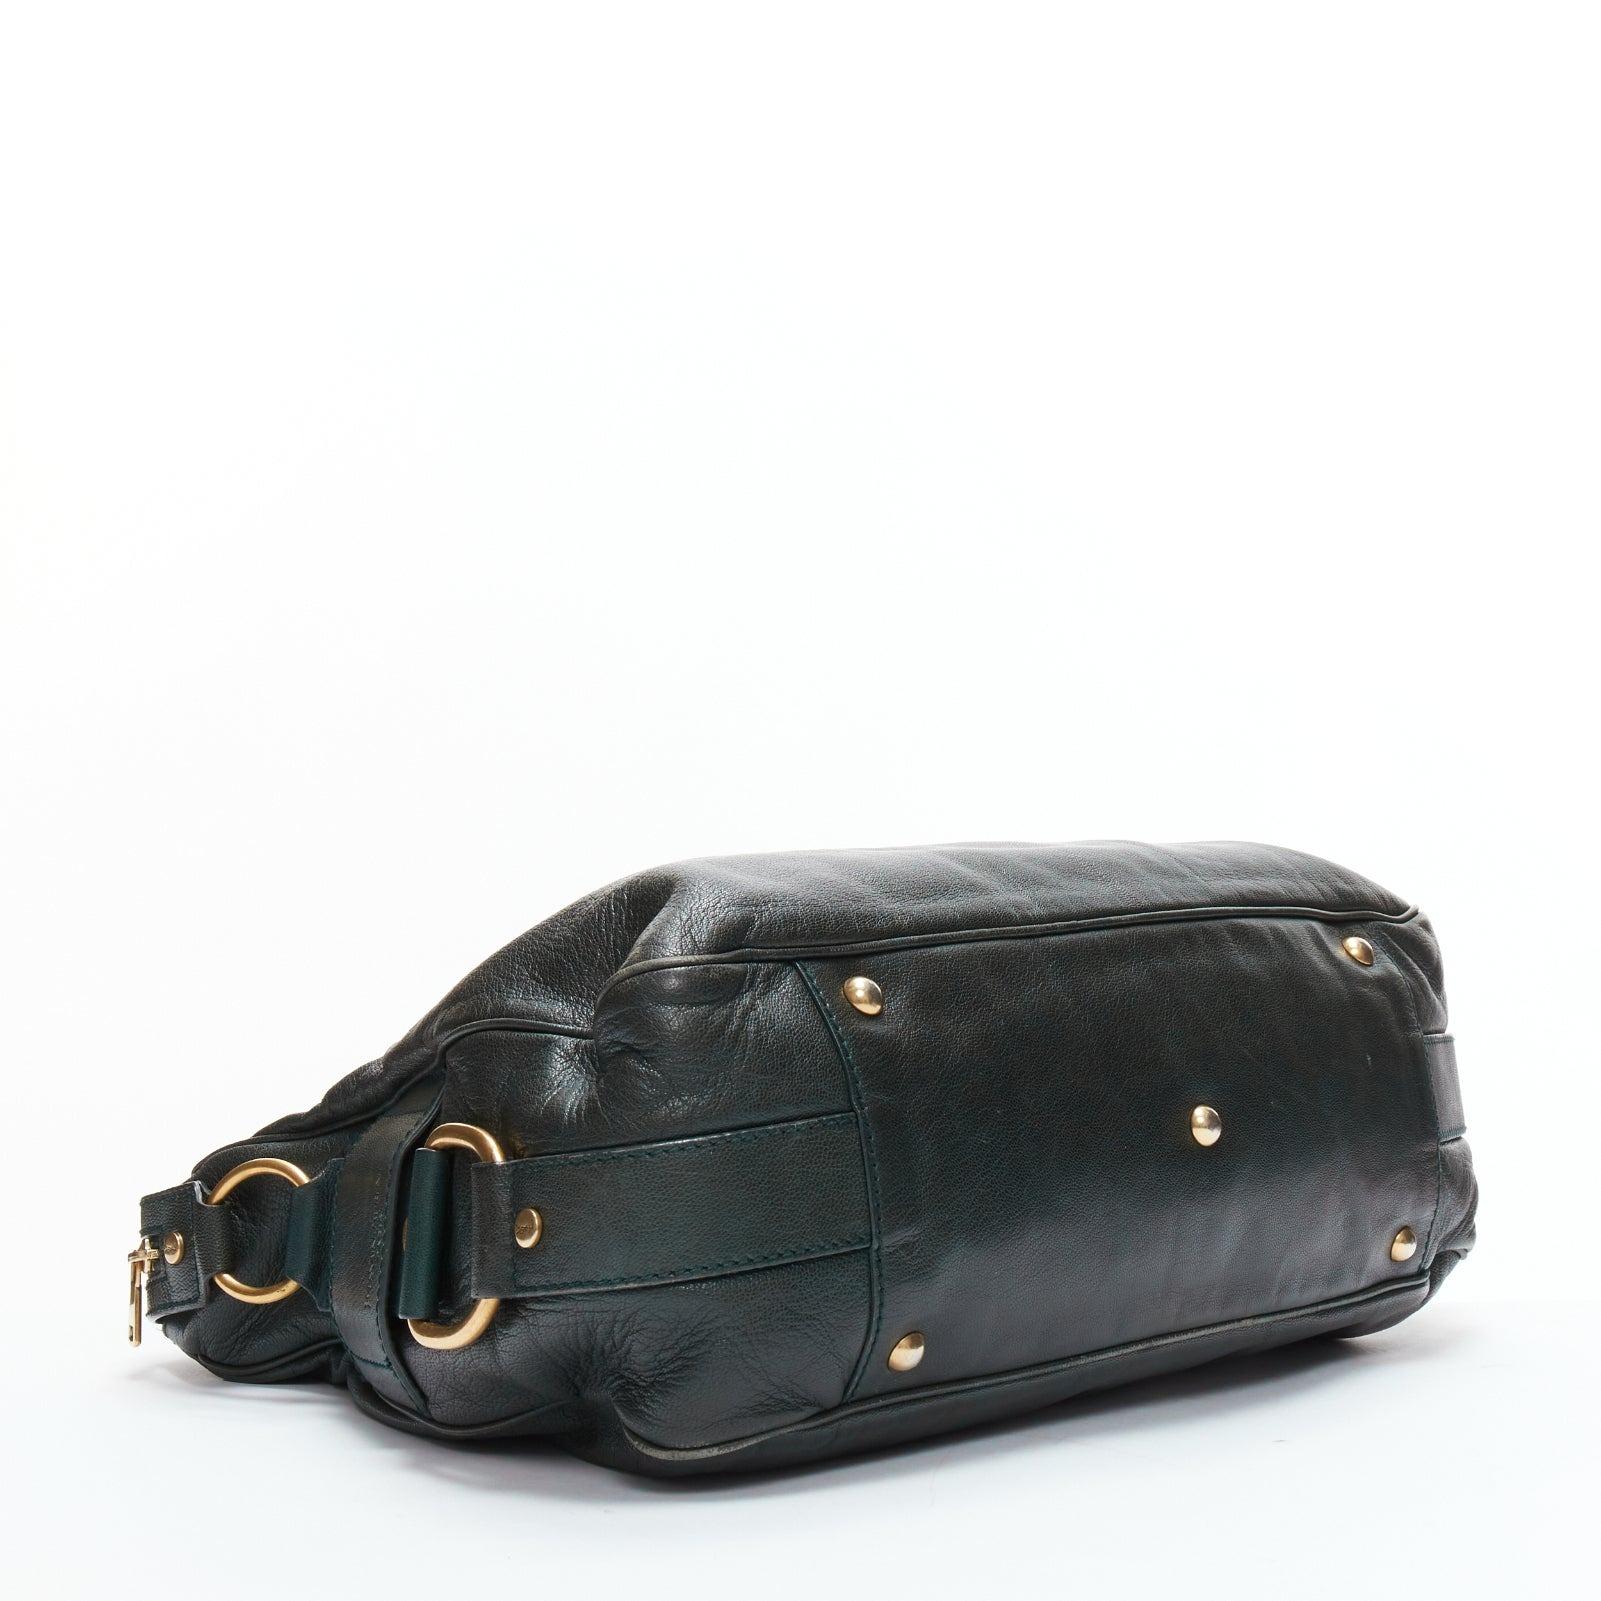 YVES SAINT LAURENT Rive Gauche Muse dark green leather GHW satchel bag 3